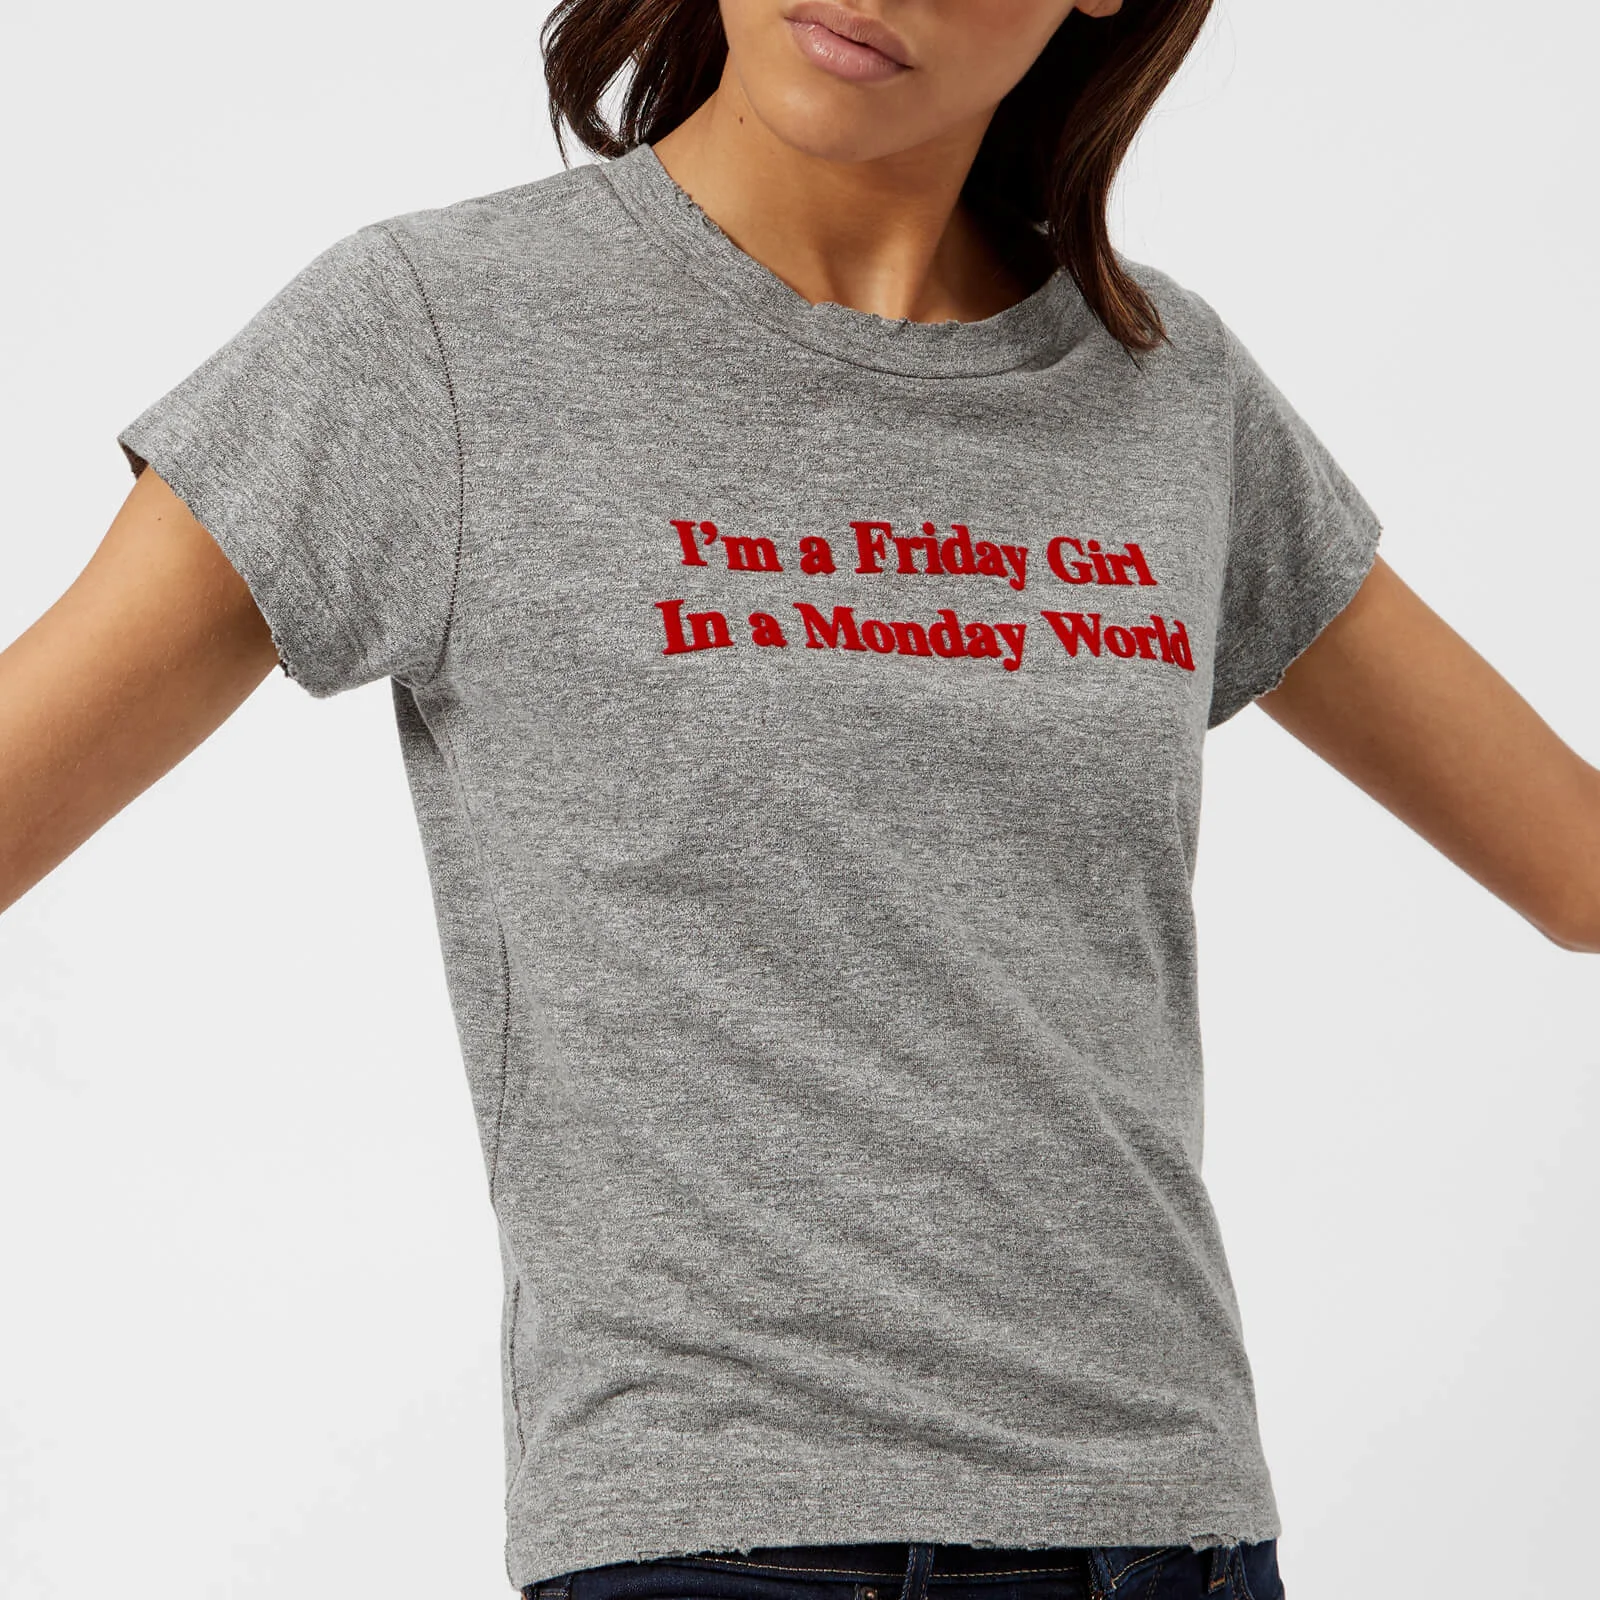 Wildfox Women's Friday Girl Short Sleeve T-Shirt - Grey Heather Image 1